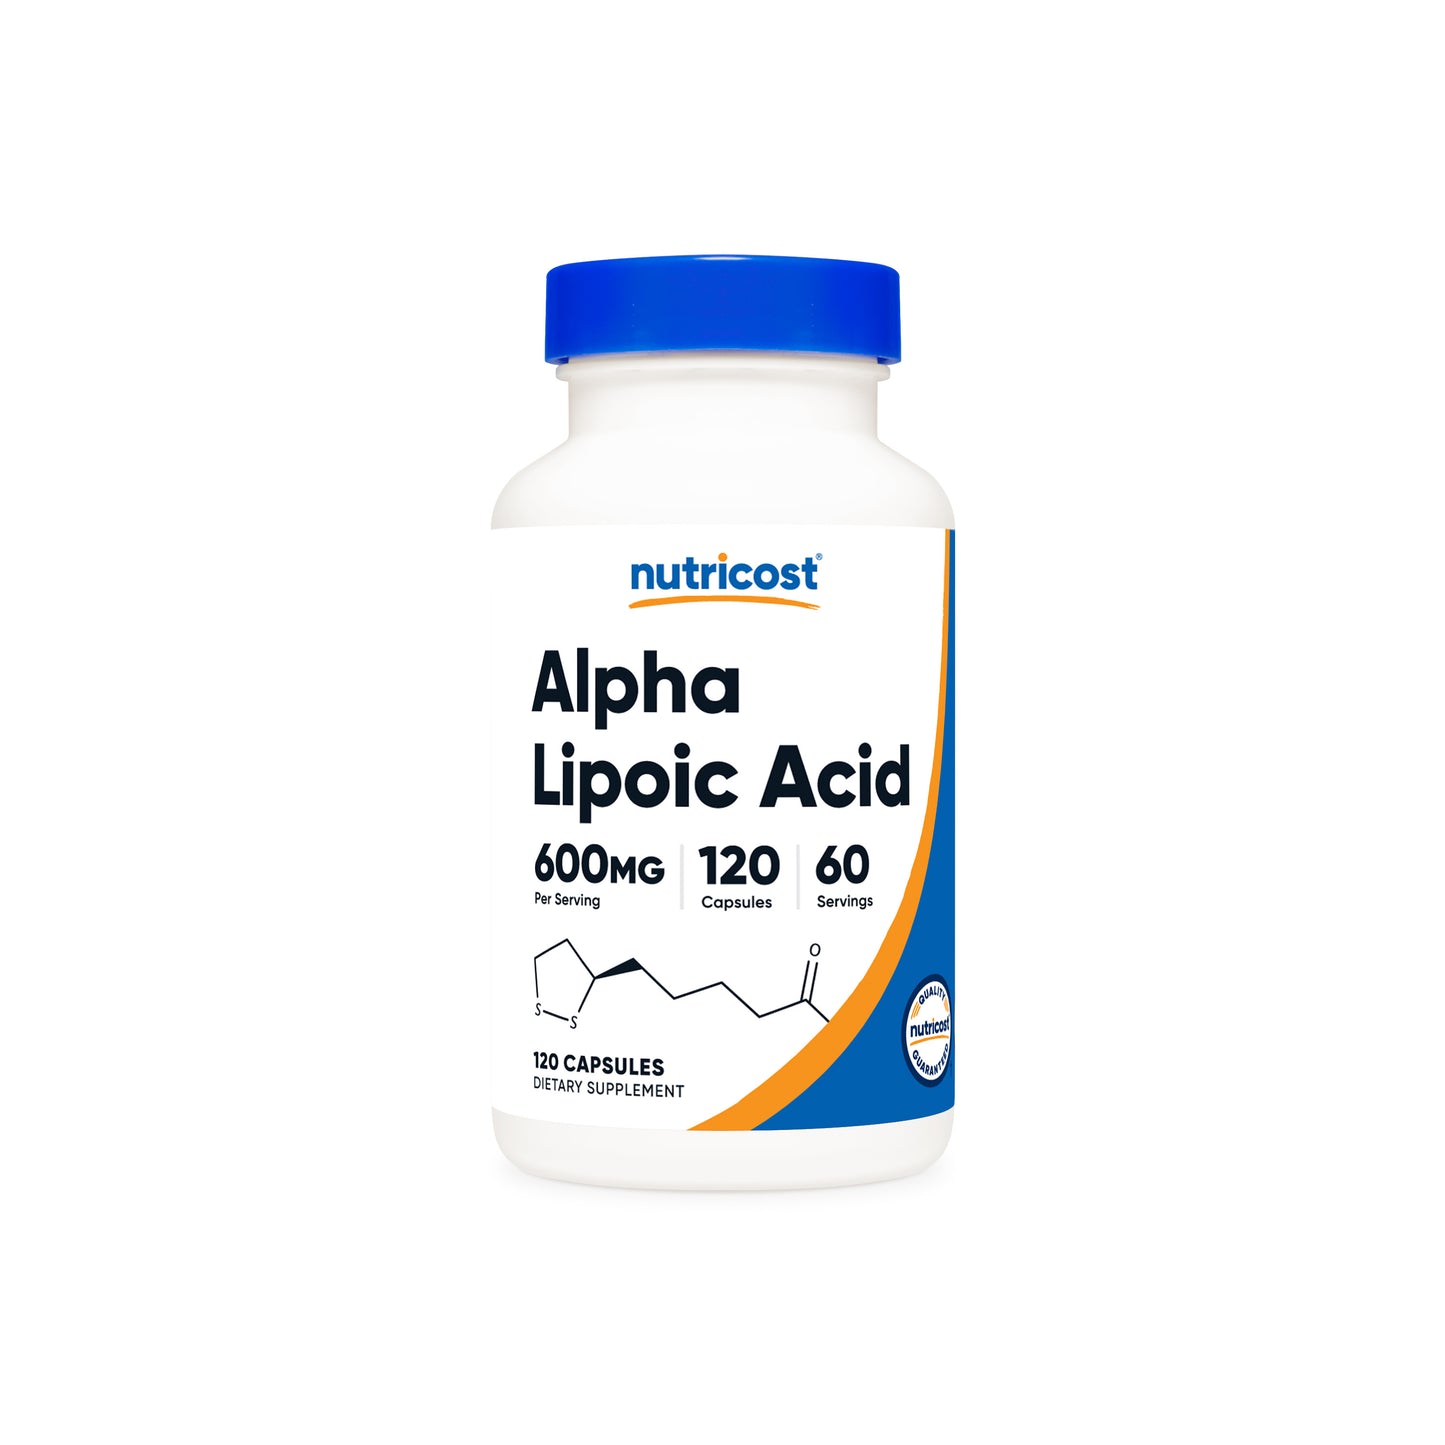 Nutricost Alpha Lipoic Acid